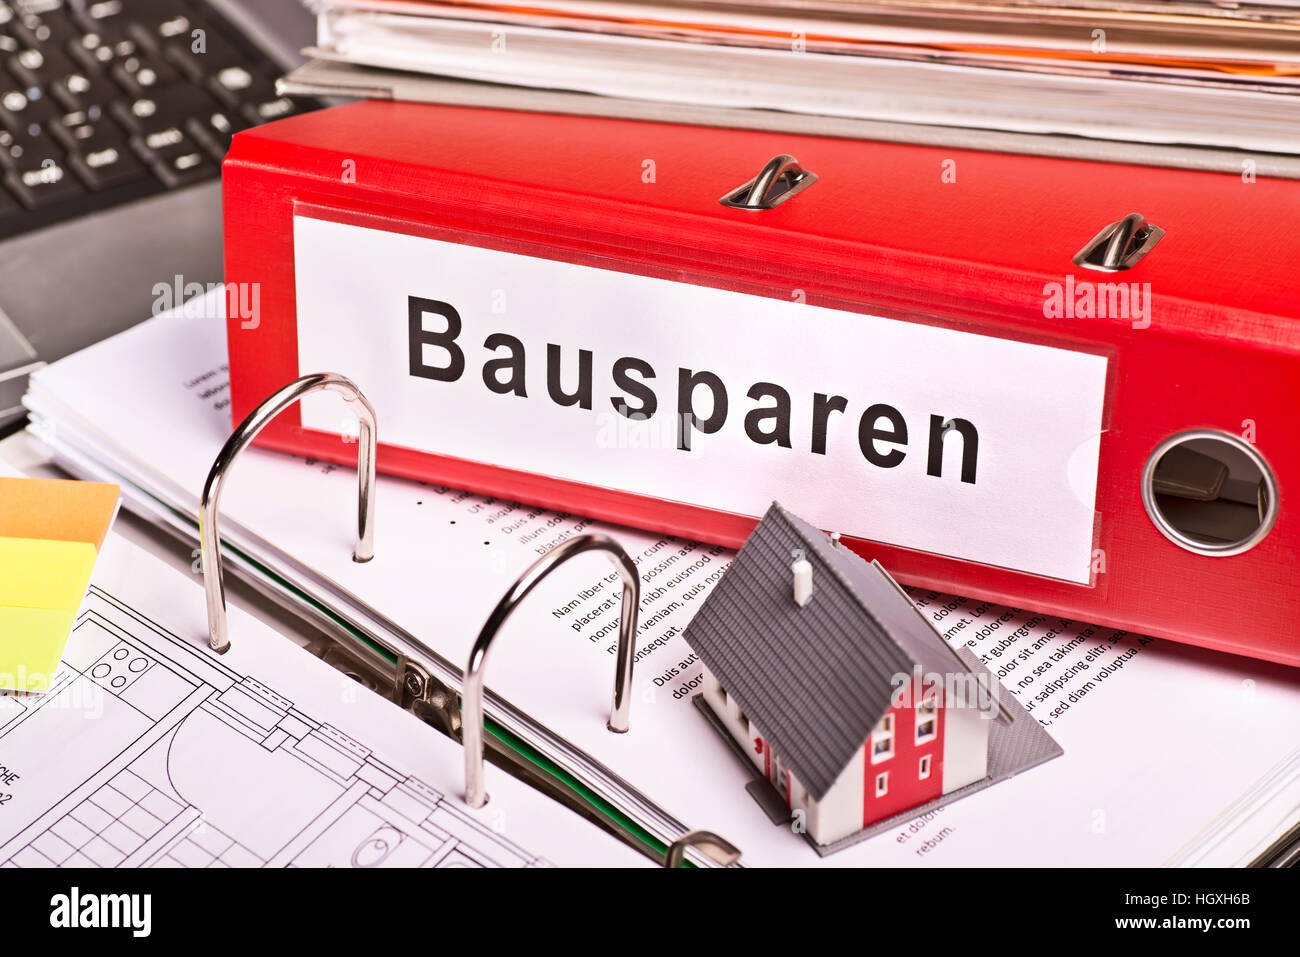 Red file folder labeled 'Bausparen' for building savings Stock Photo